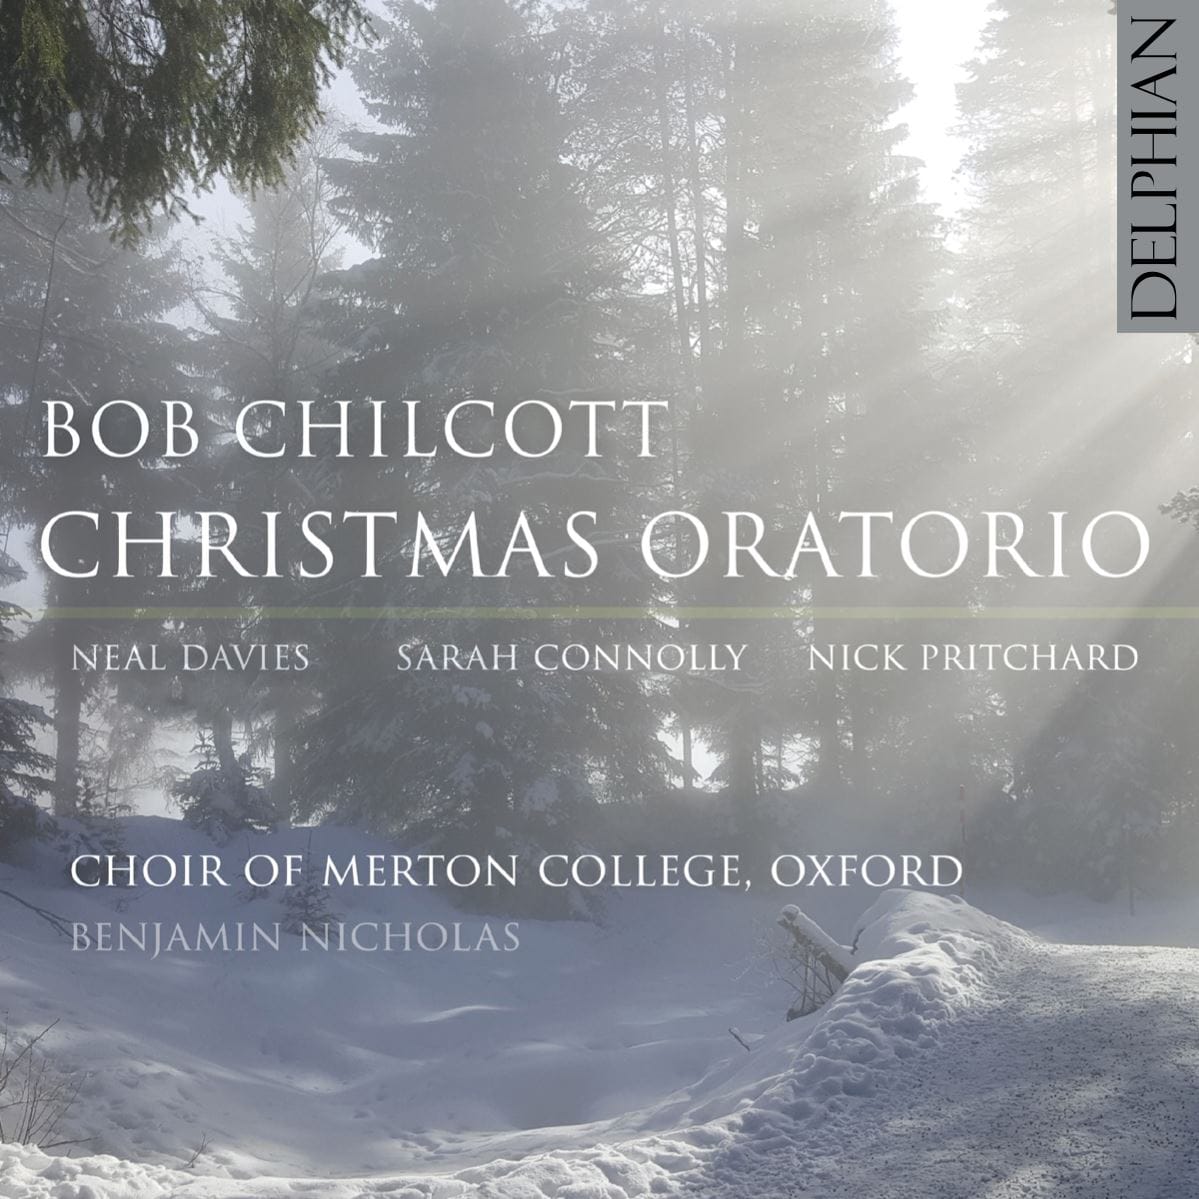 Bob Chilcott's Christmas Oratorio